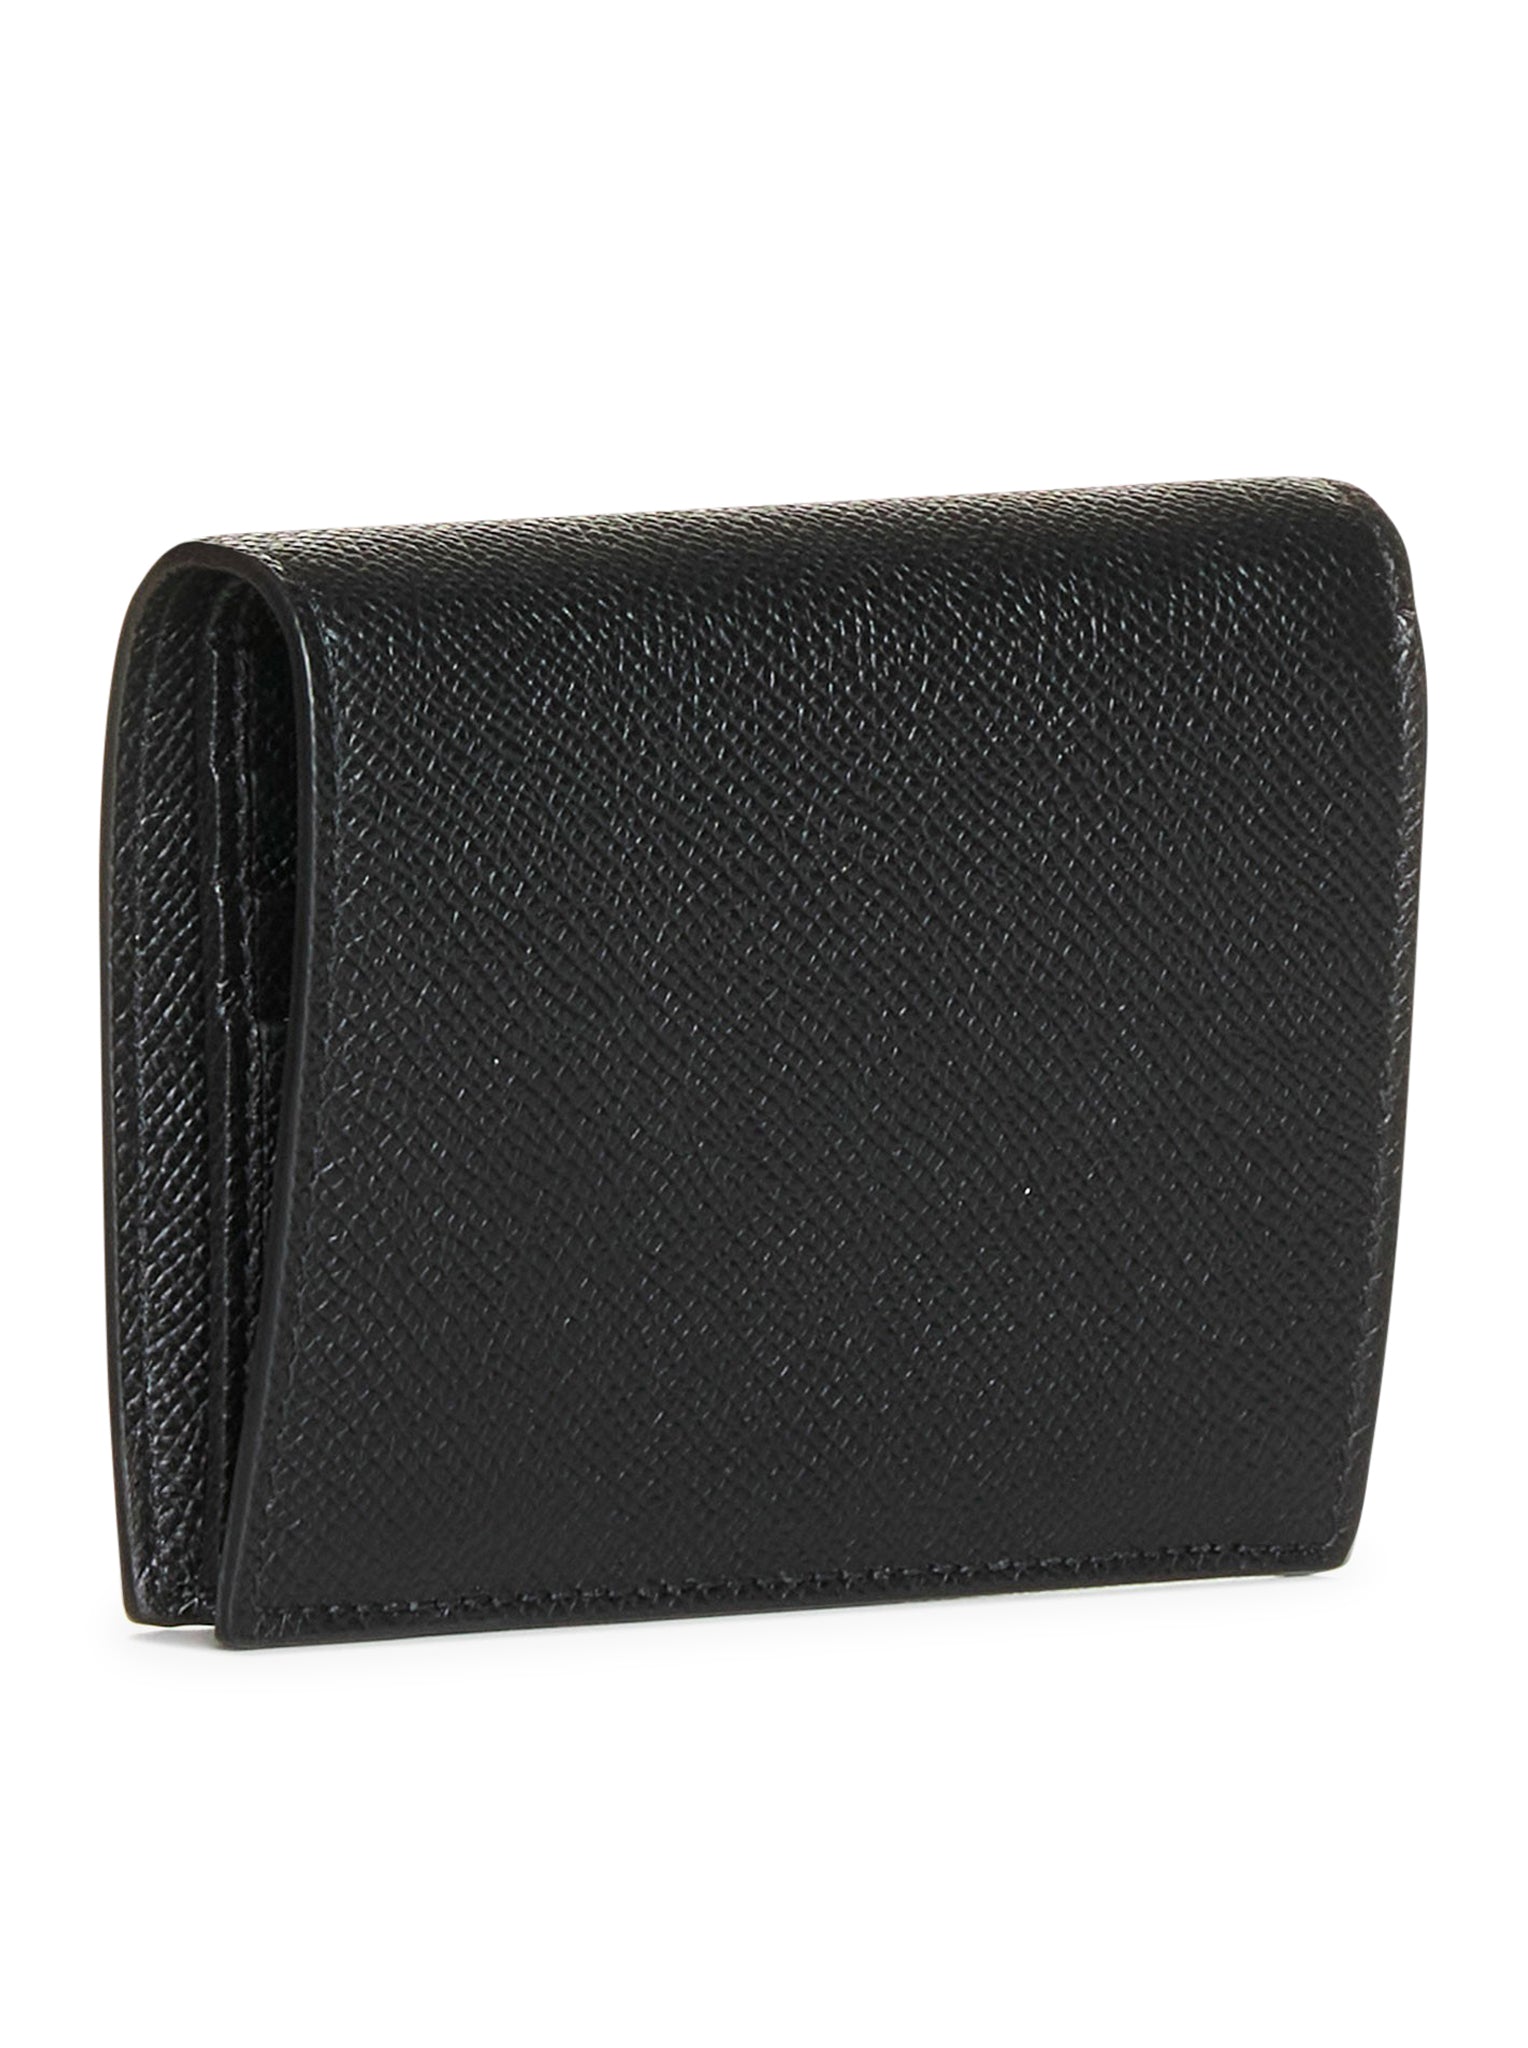 Smythson Snap Button Wallet - Black